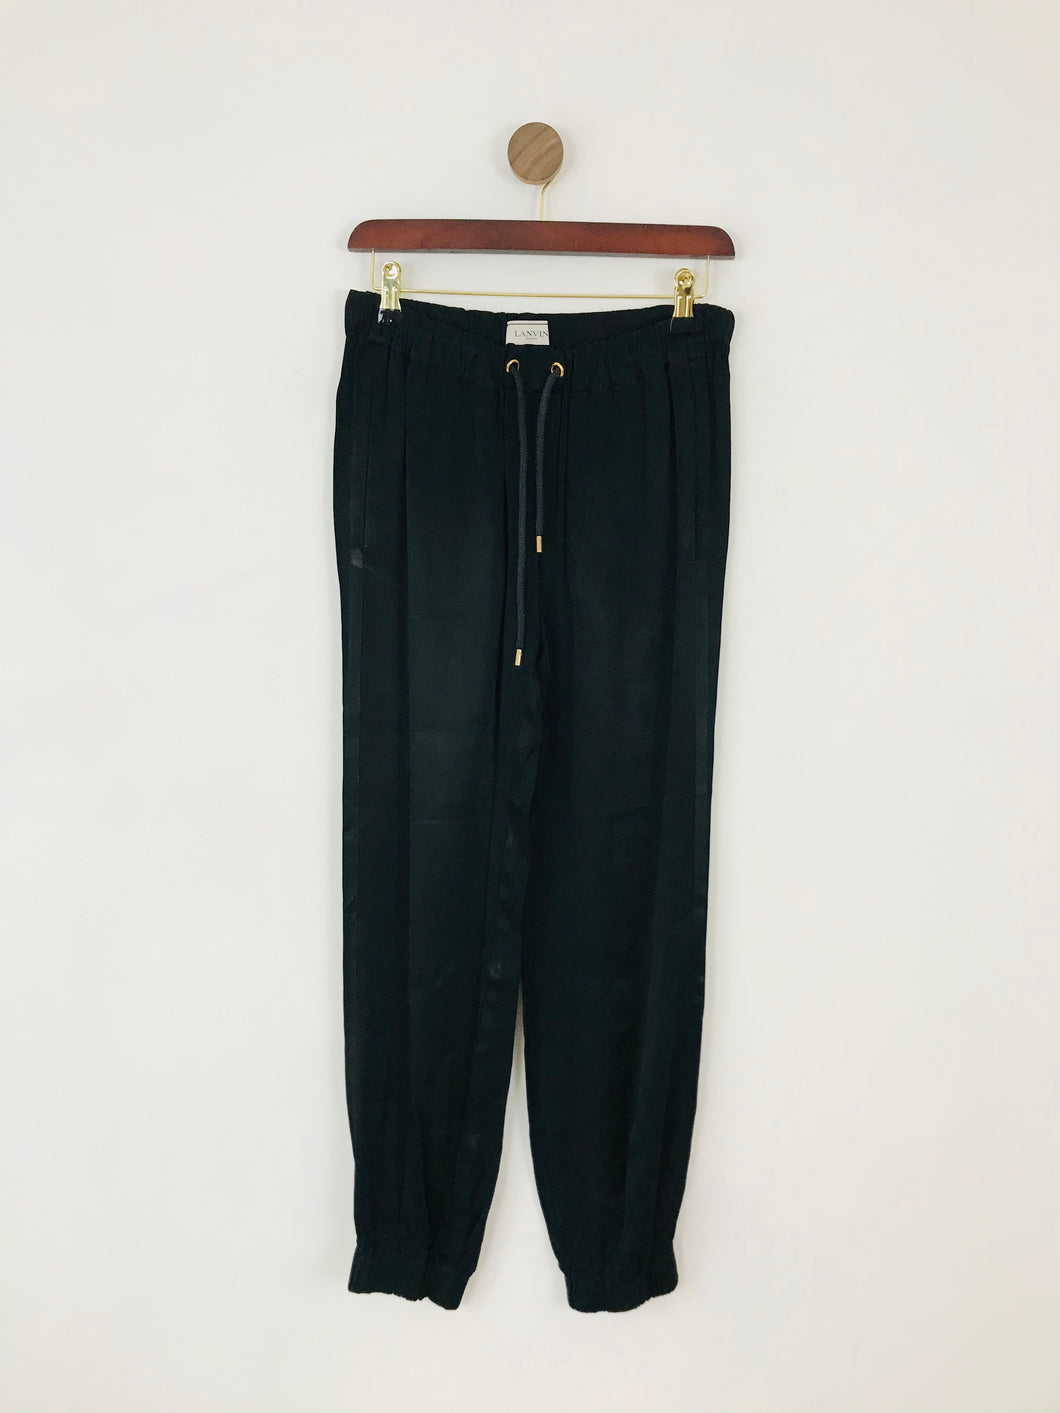 Lanvin Women’s Silky Relaxed Cuffed Joggers Trousers | 38 UK10 | Black